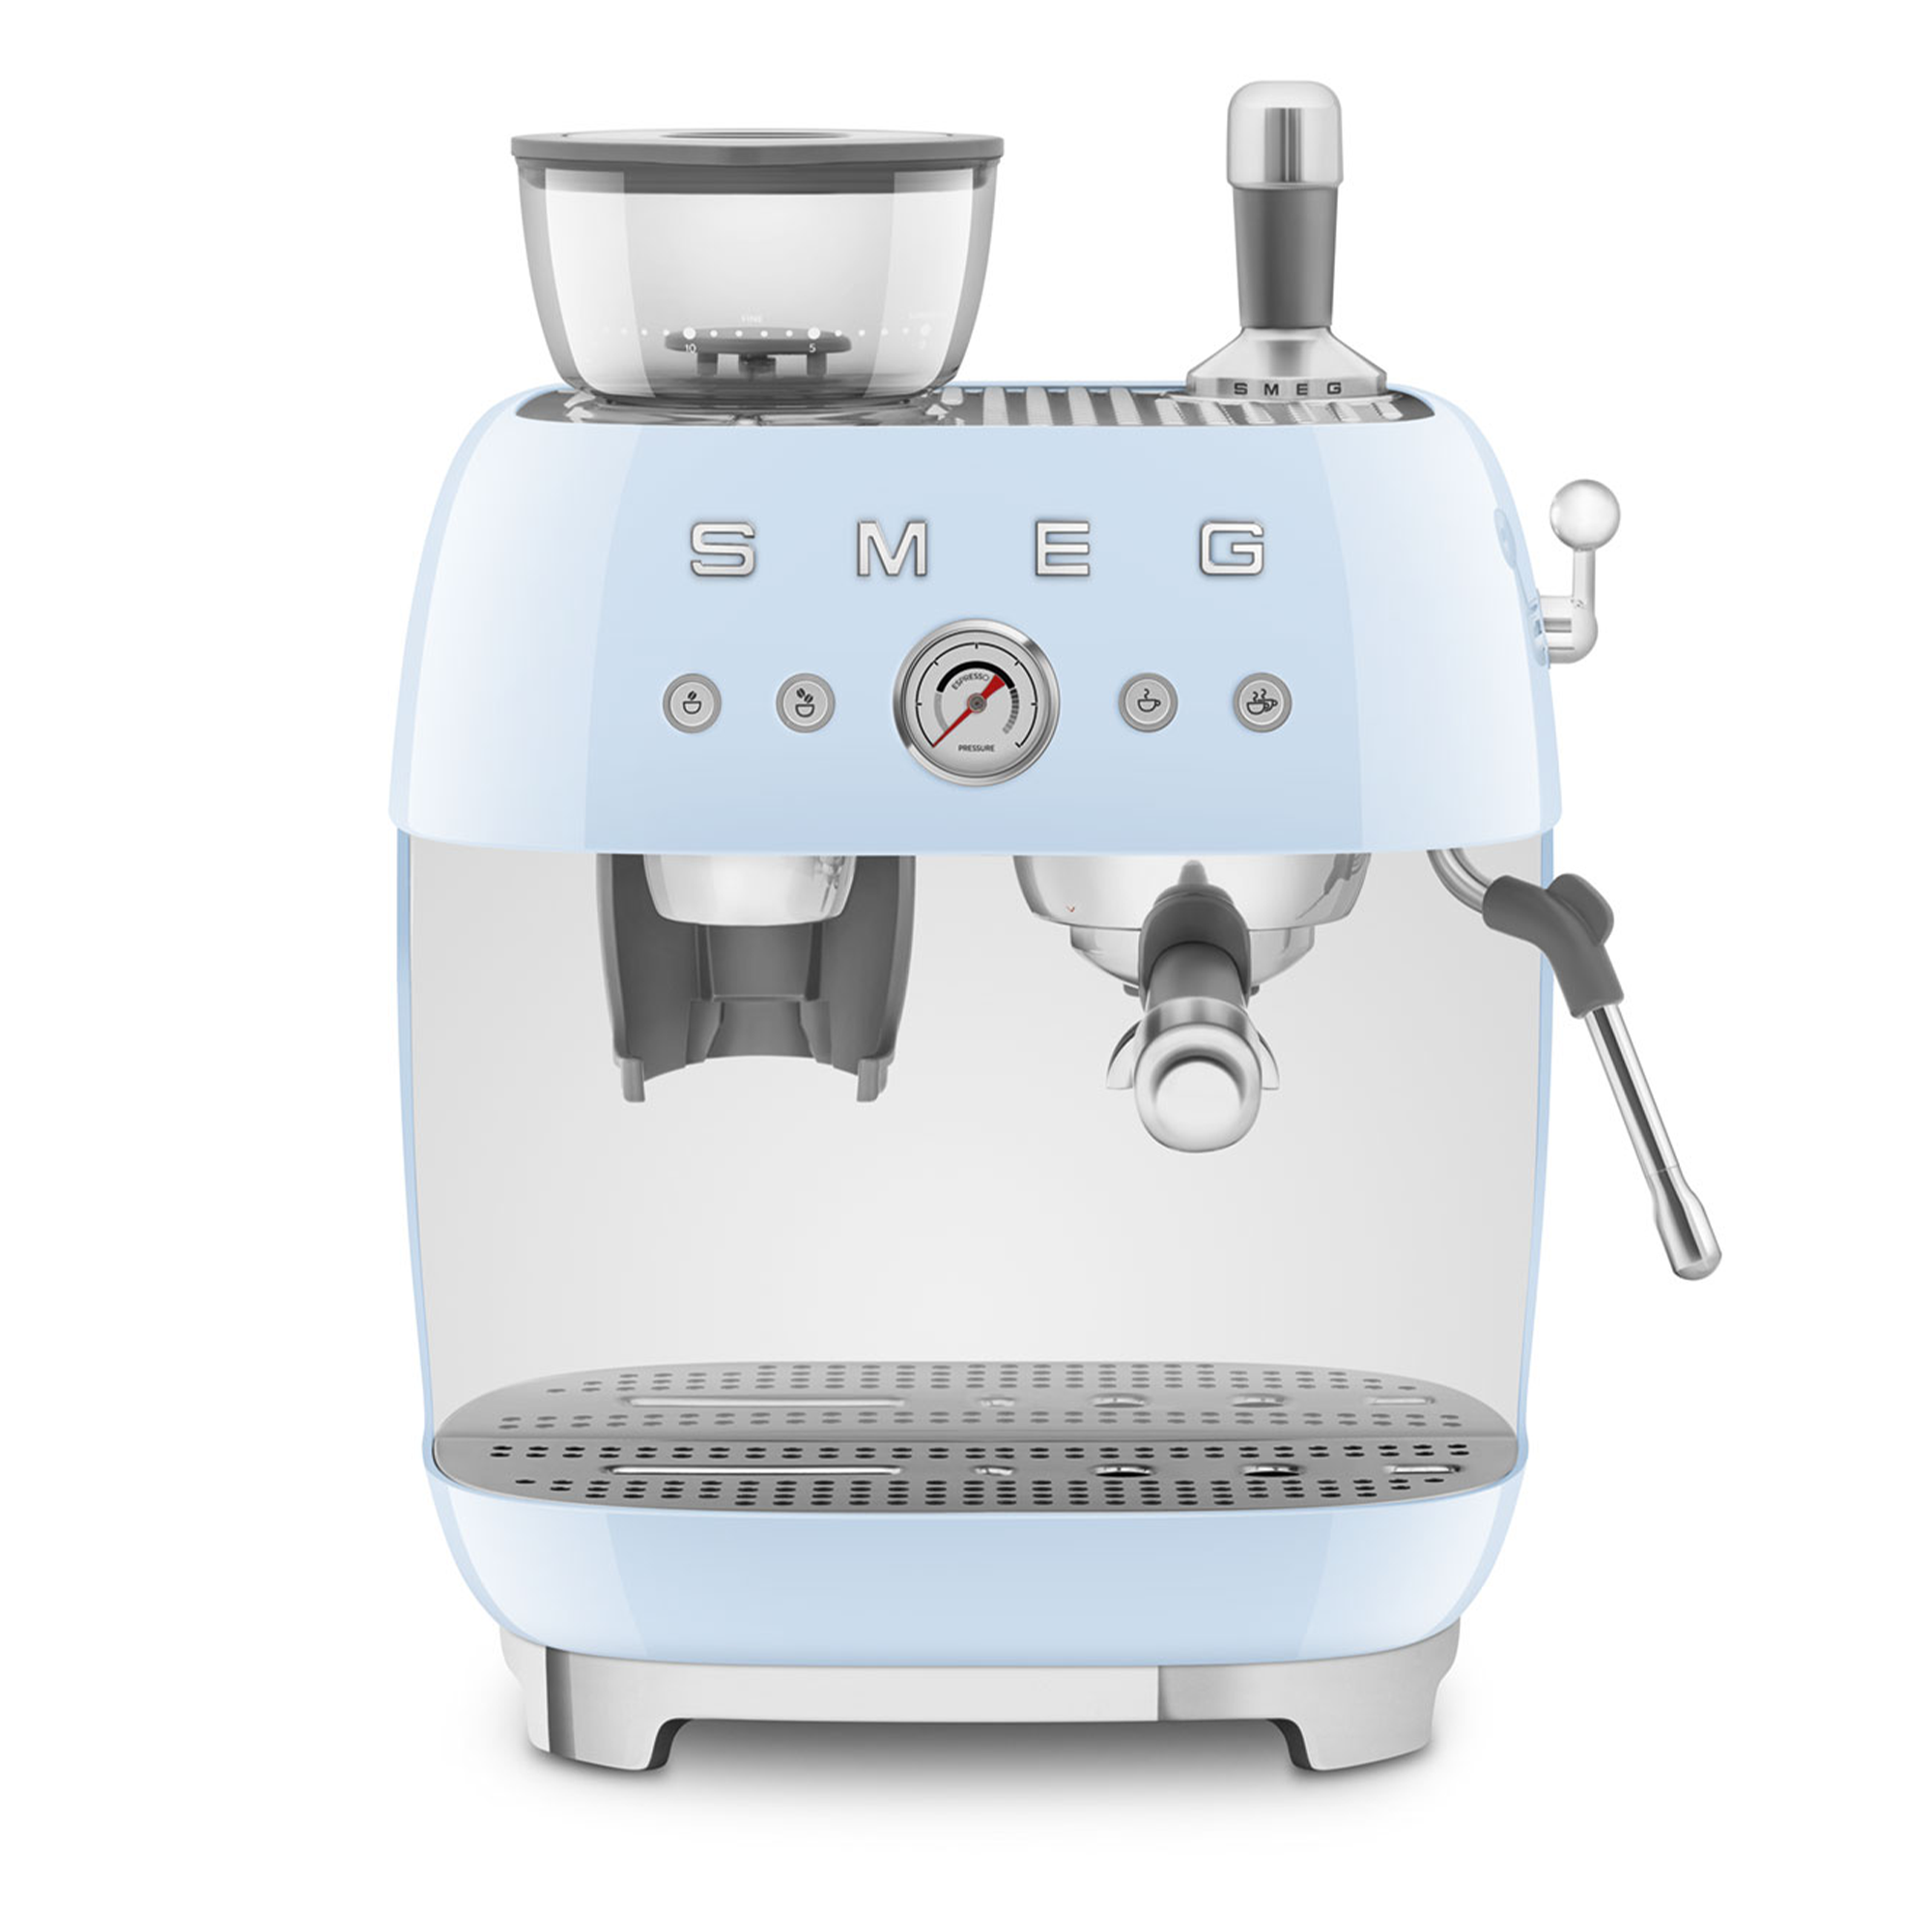 SMEG espresso machine with grinder 50's style - pastel blue